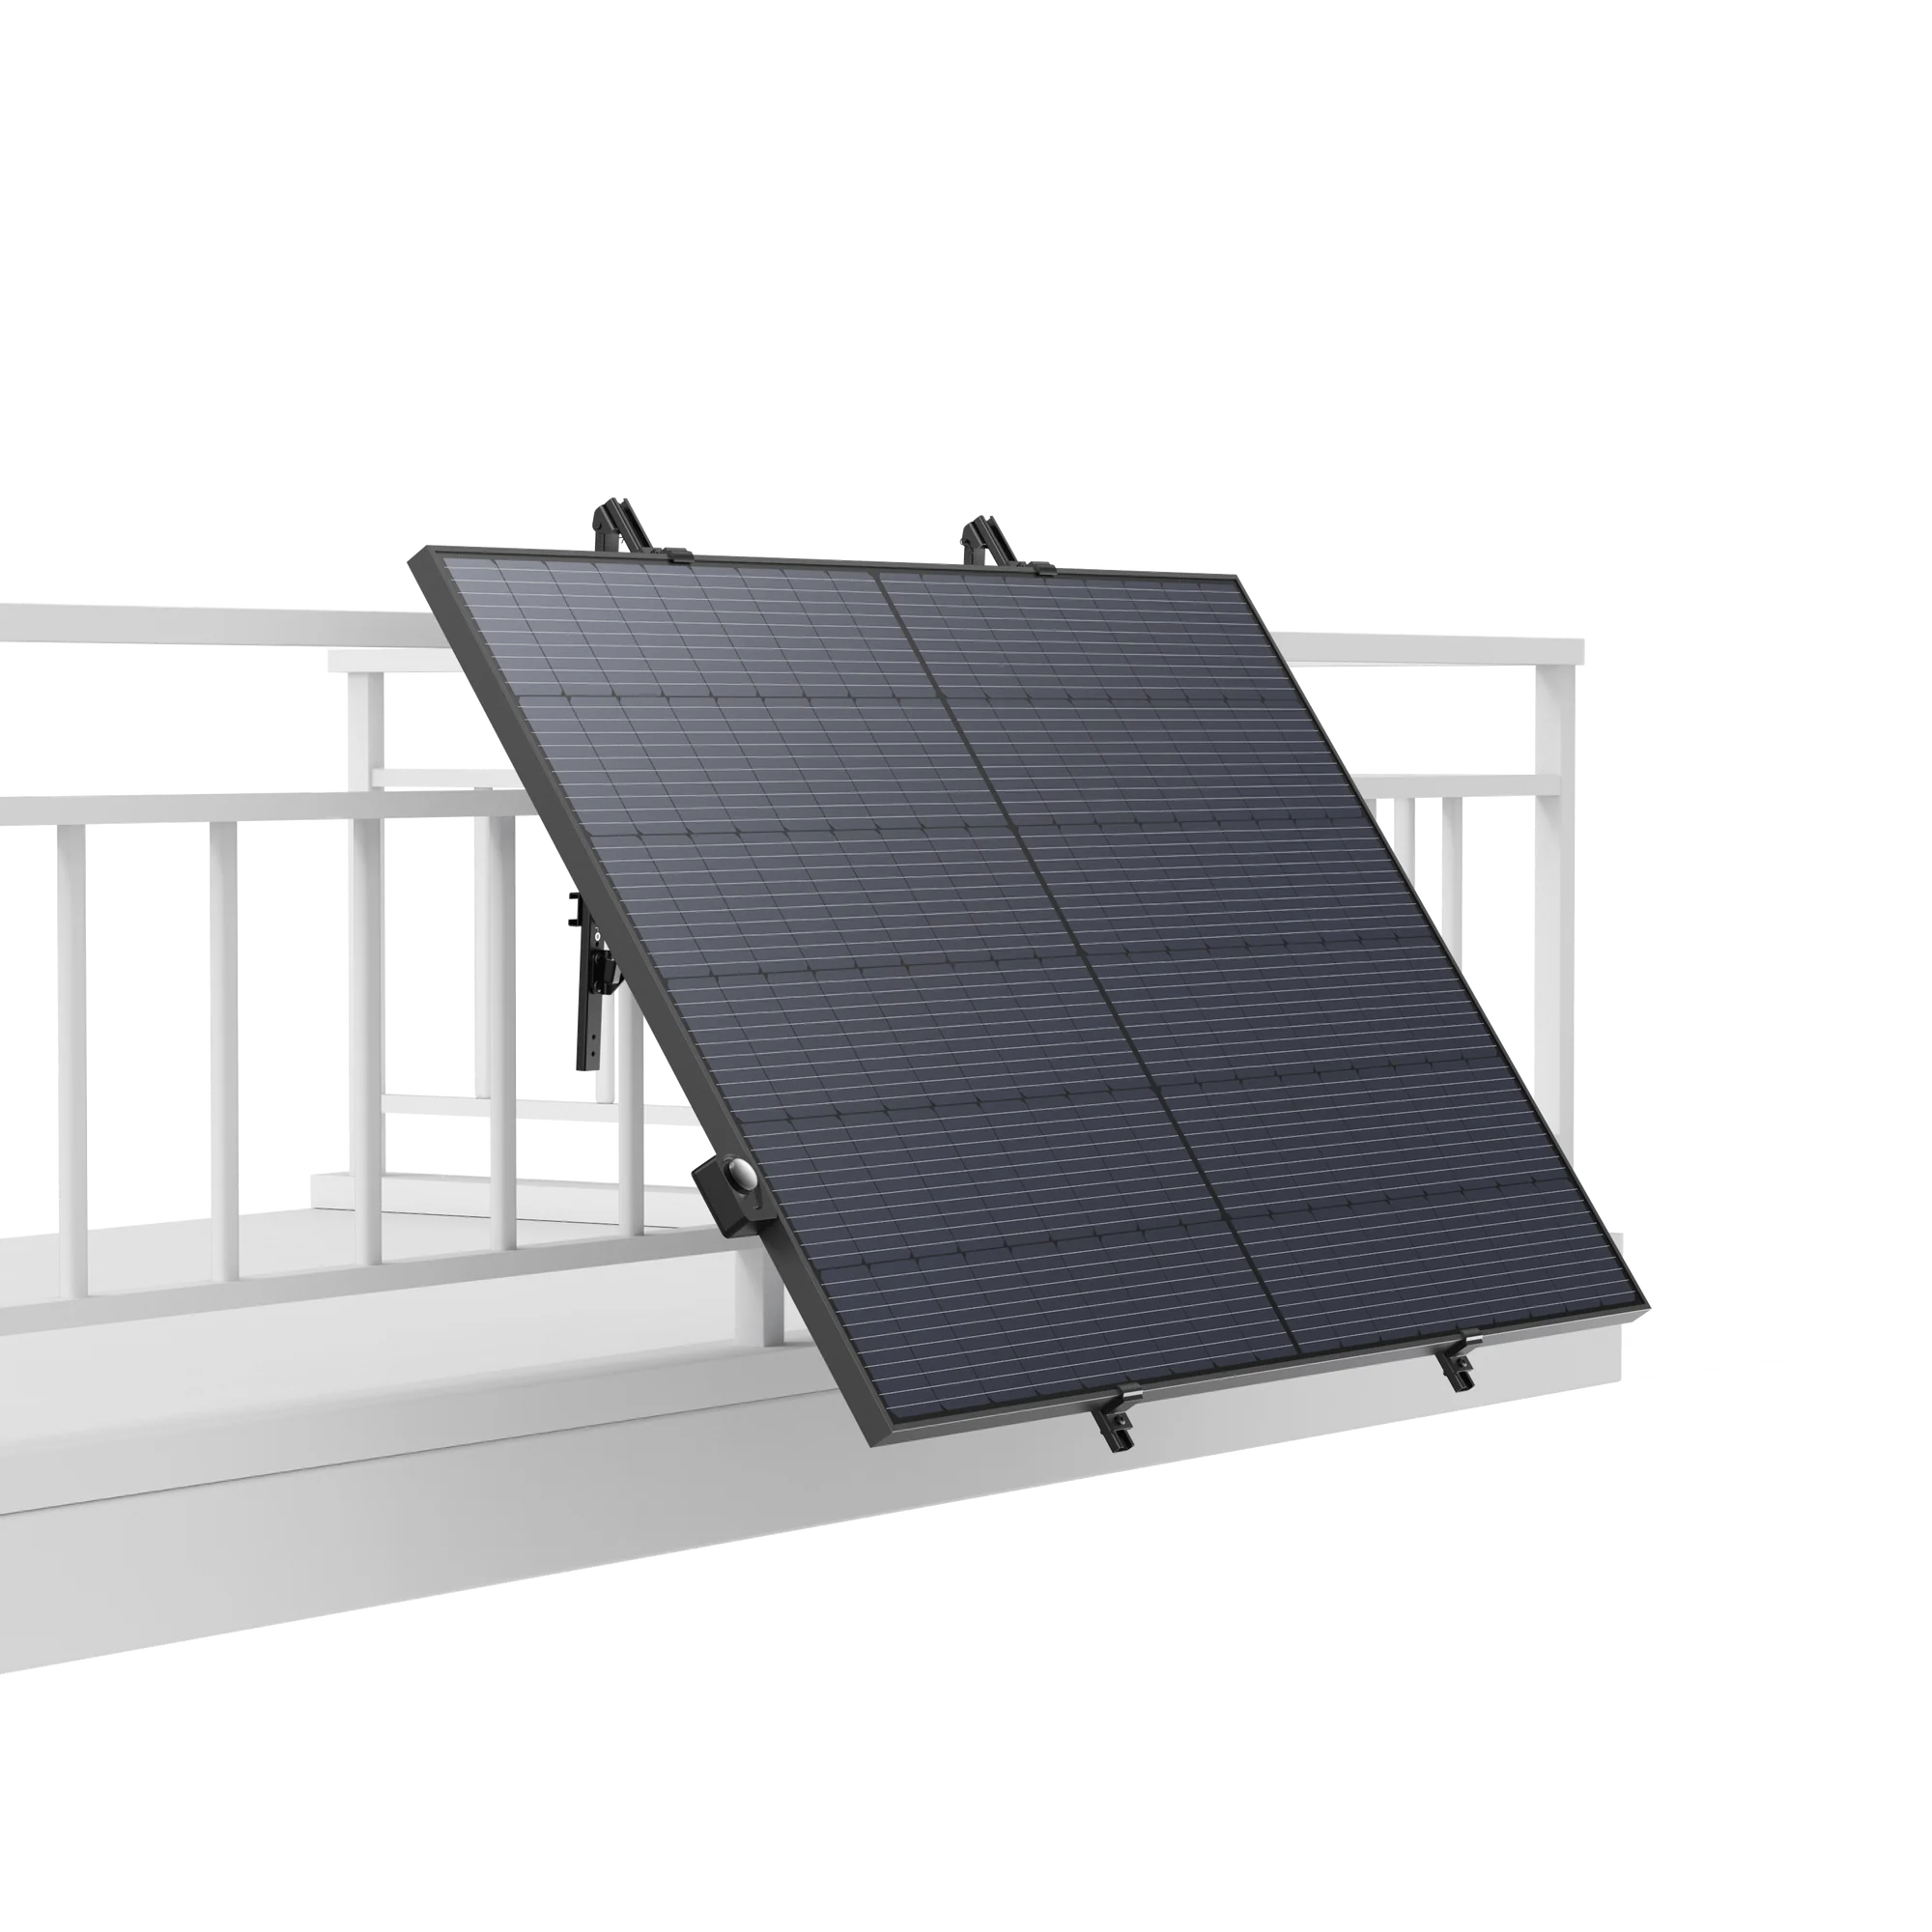 Jednoosý solární sledovač